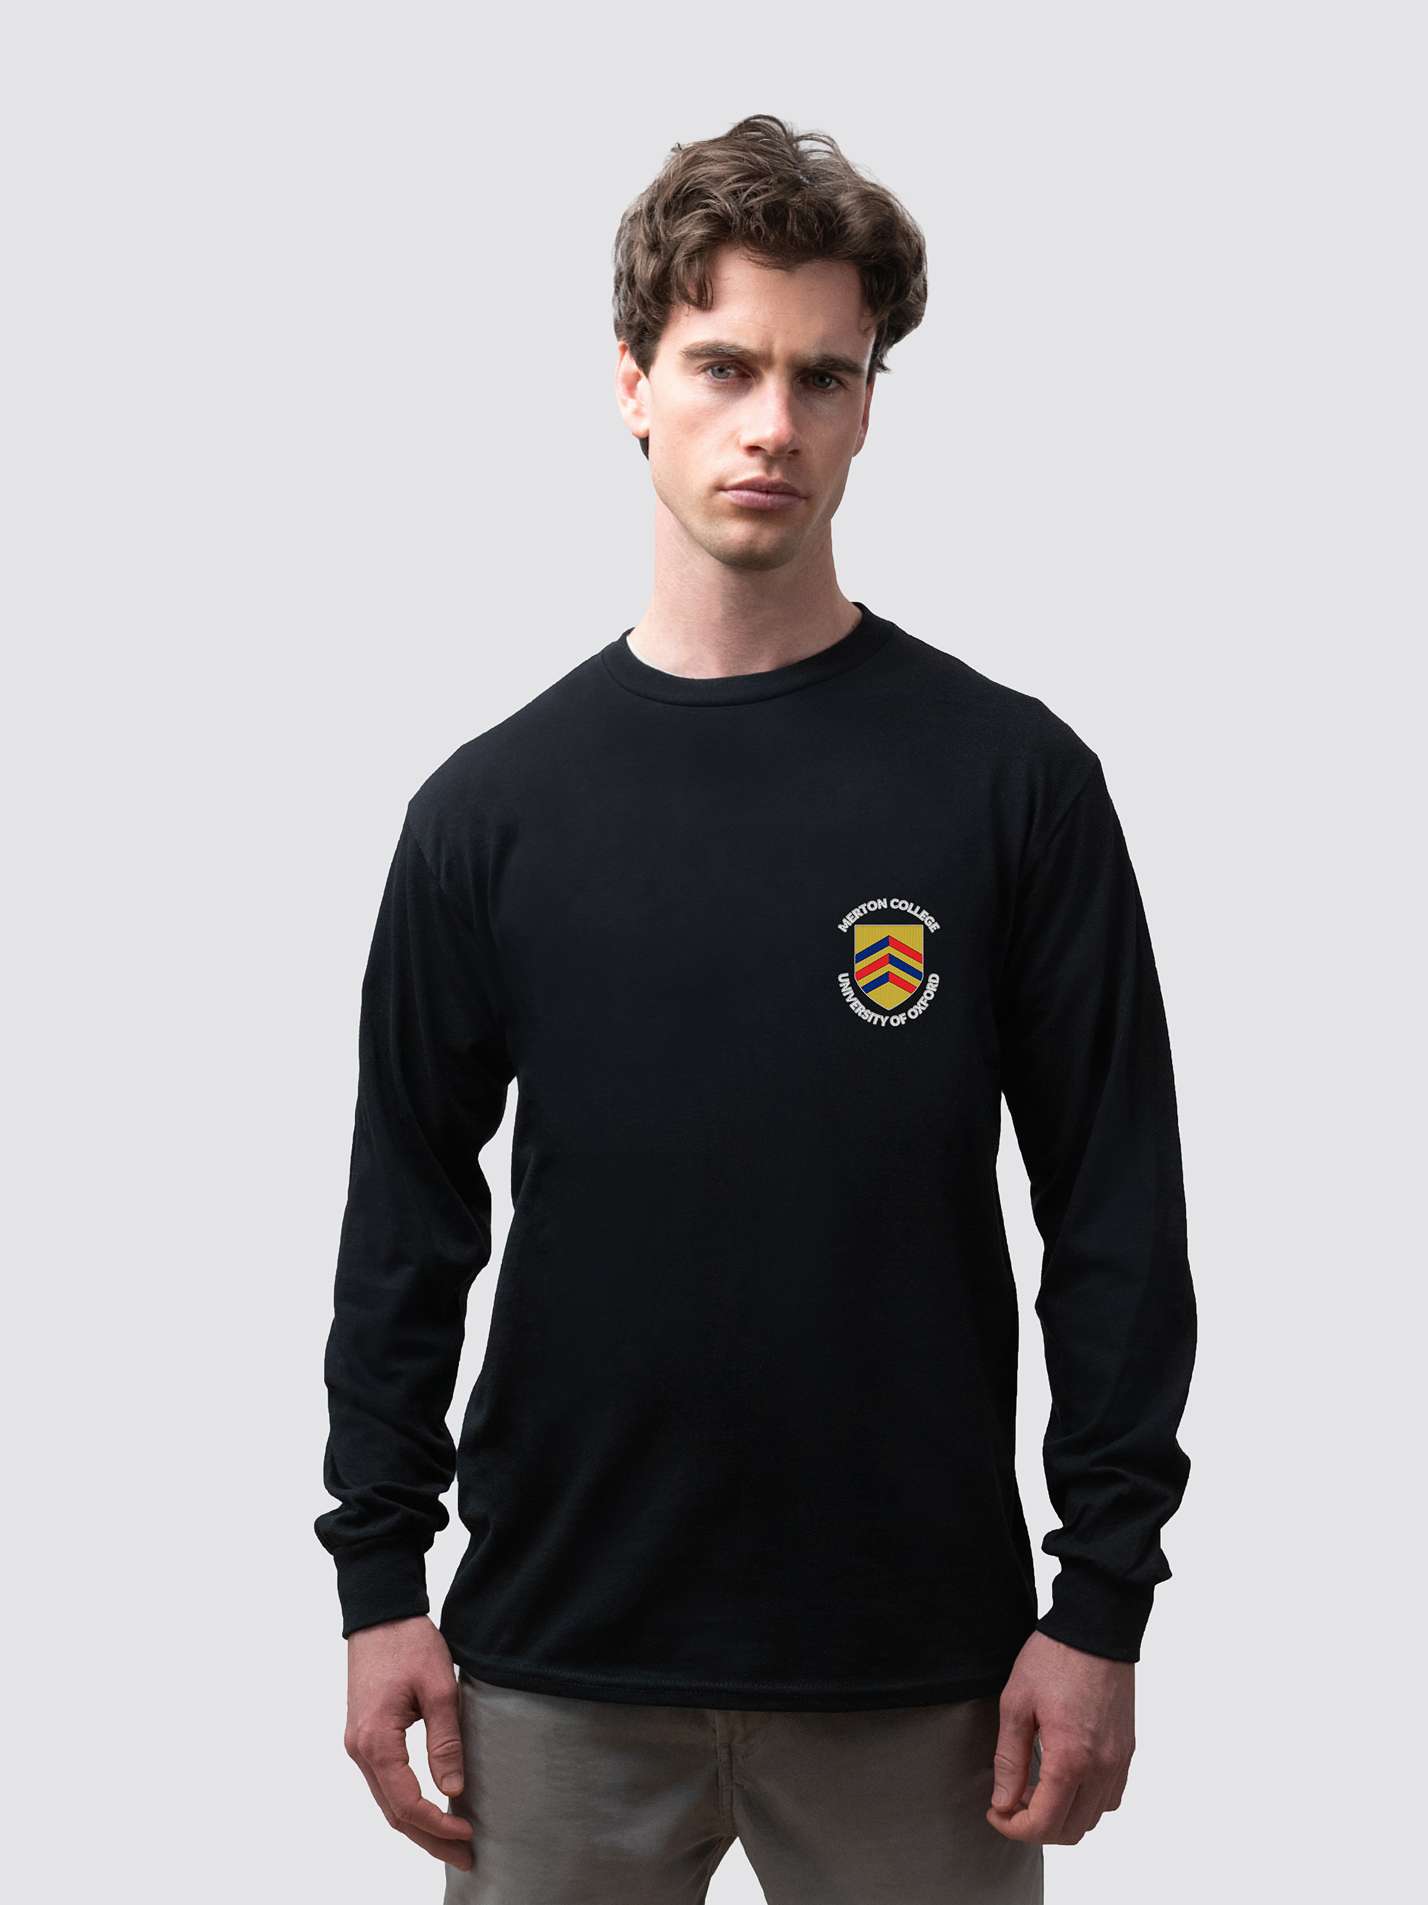 Merton College Oxford JCR Unisex Cotton Long Sleeve T-Shirt